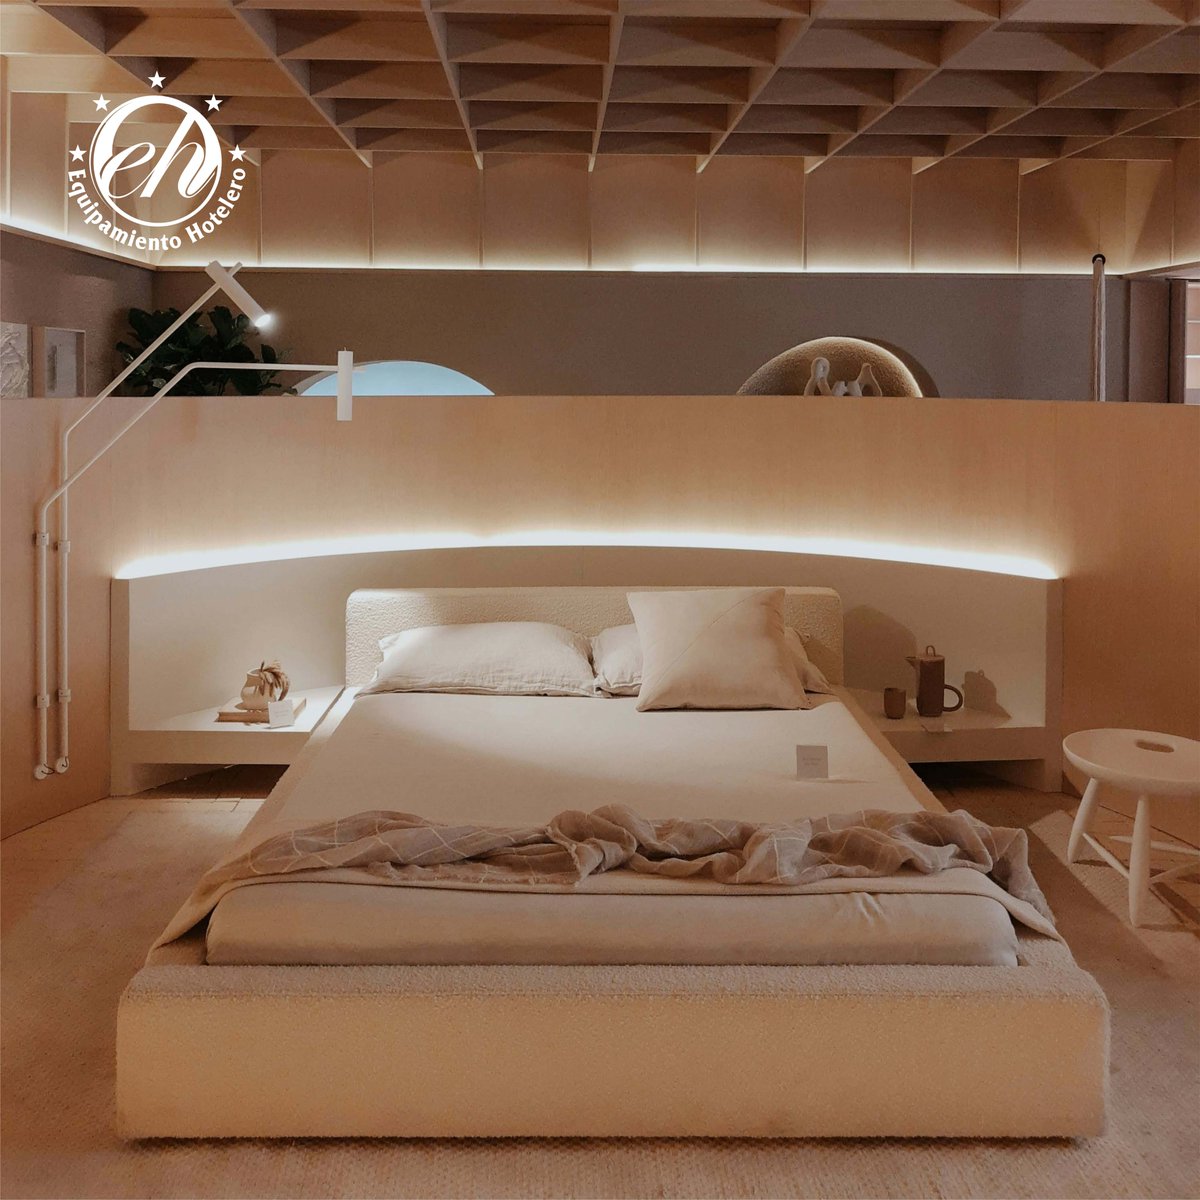 Transforma tu hotel.
equipamientohotelerodemexico.com
📷📷 📷 📷📷 📷📷
.
.
.
#EquipamientoHotelero #DiseñoDeInteriores #HospitalityDesign #ComodidadViajera #RentaVacacionalPremium #EquipamientoDeCalidad #DestinosInolvidables 📷📷